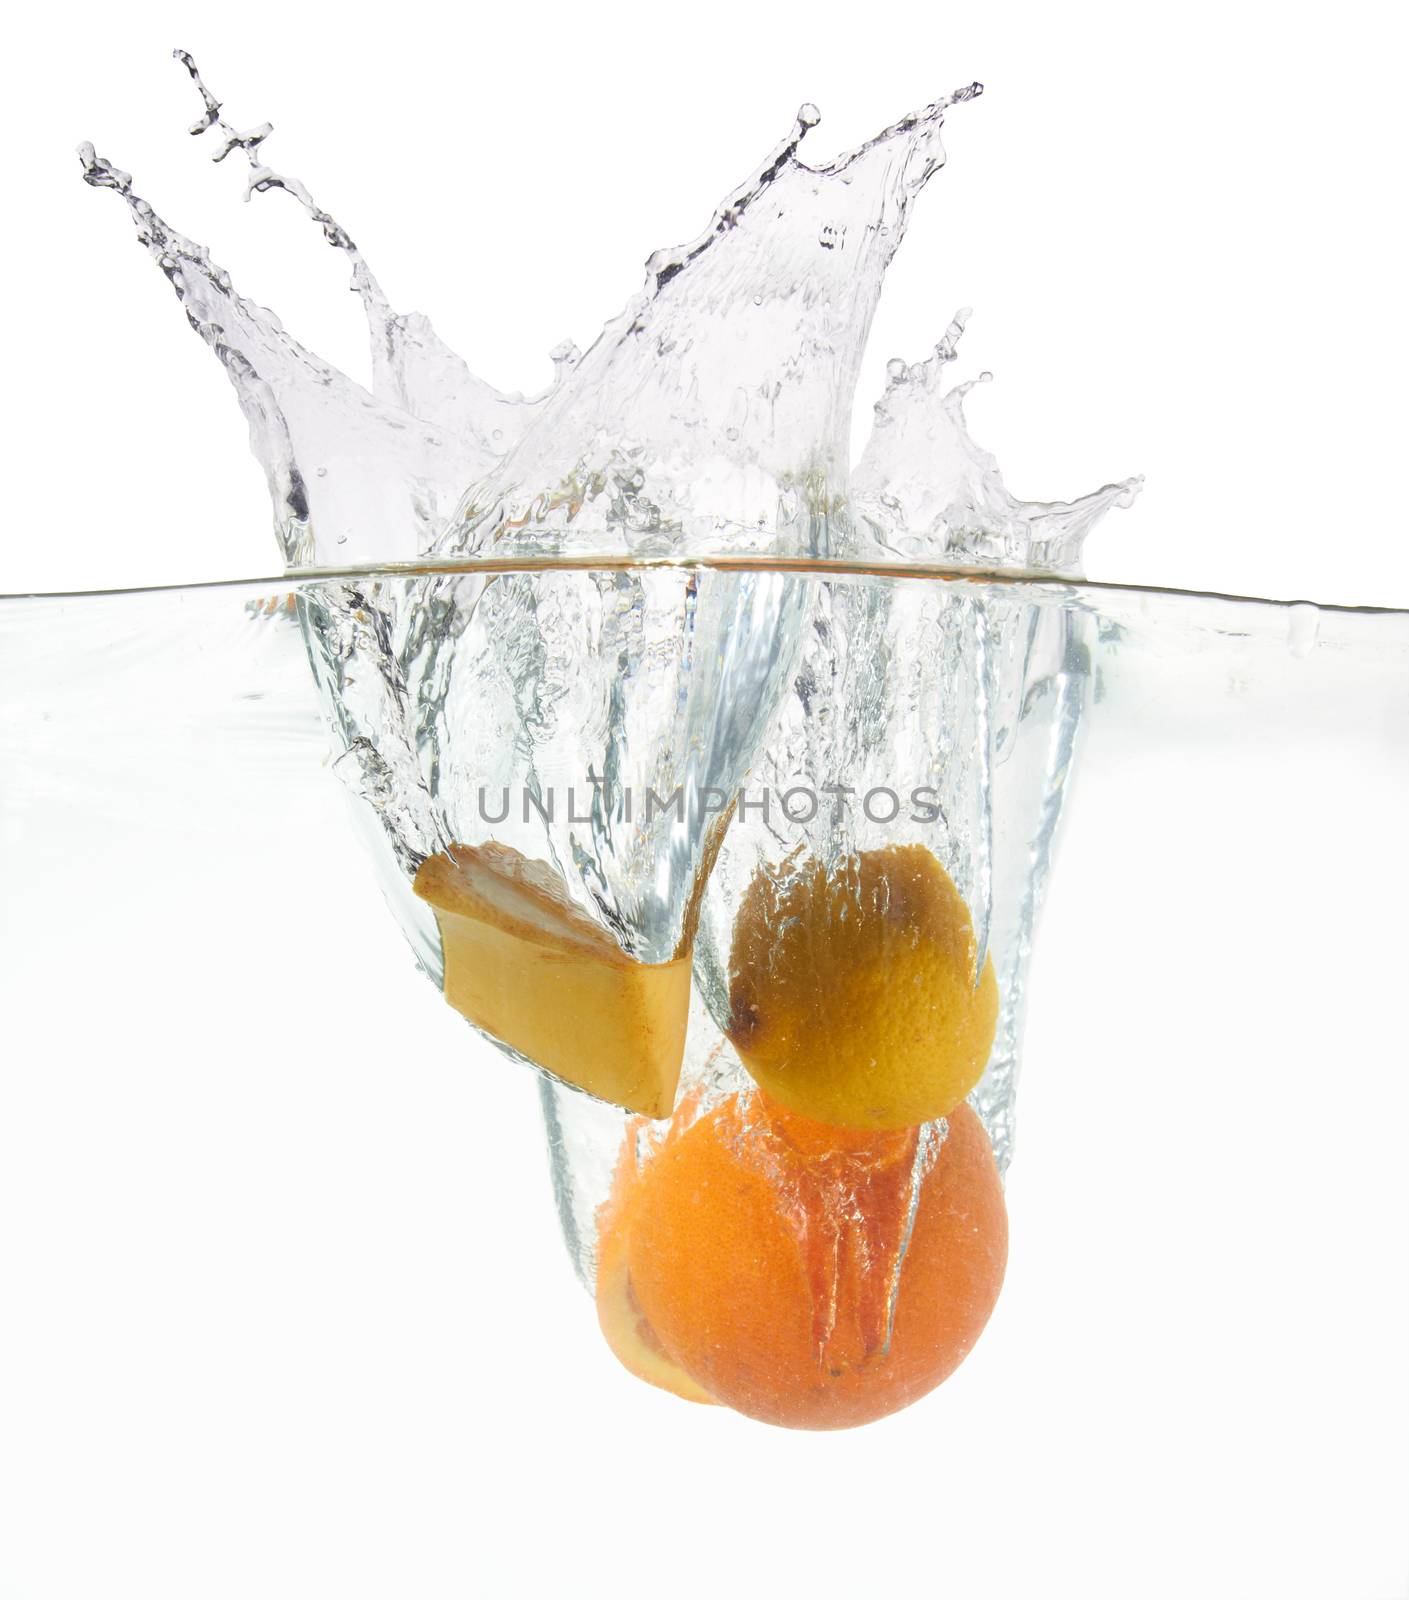  fruits in water  by pioneer111